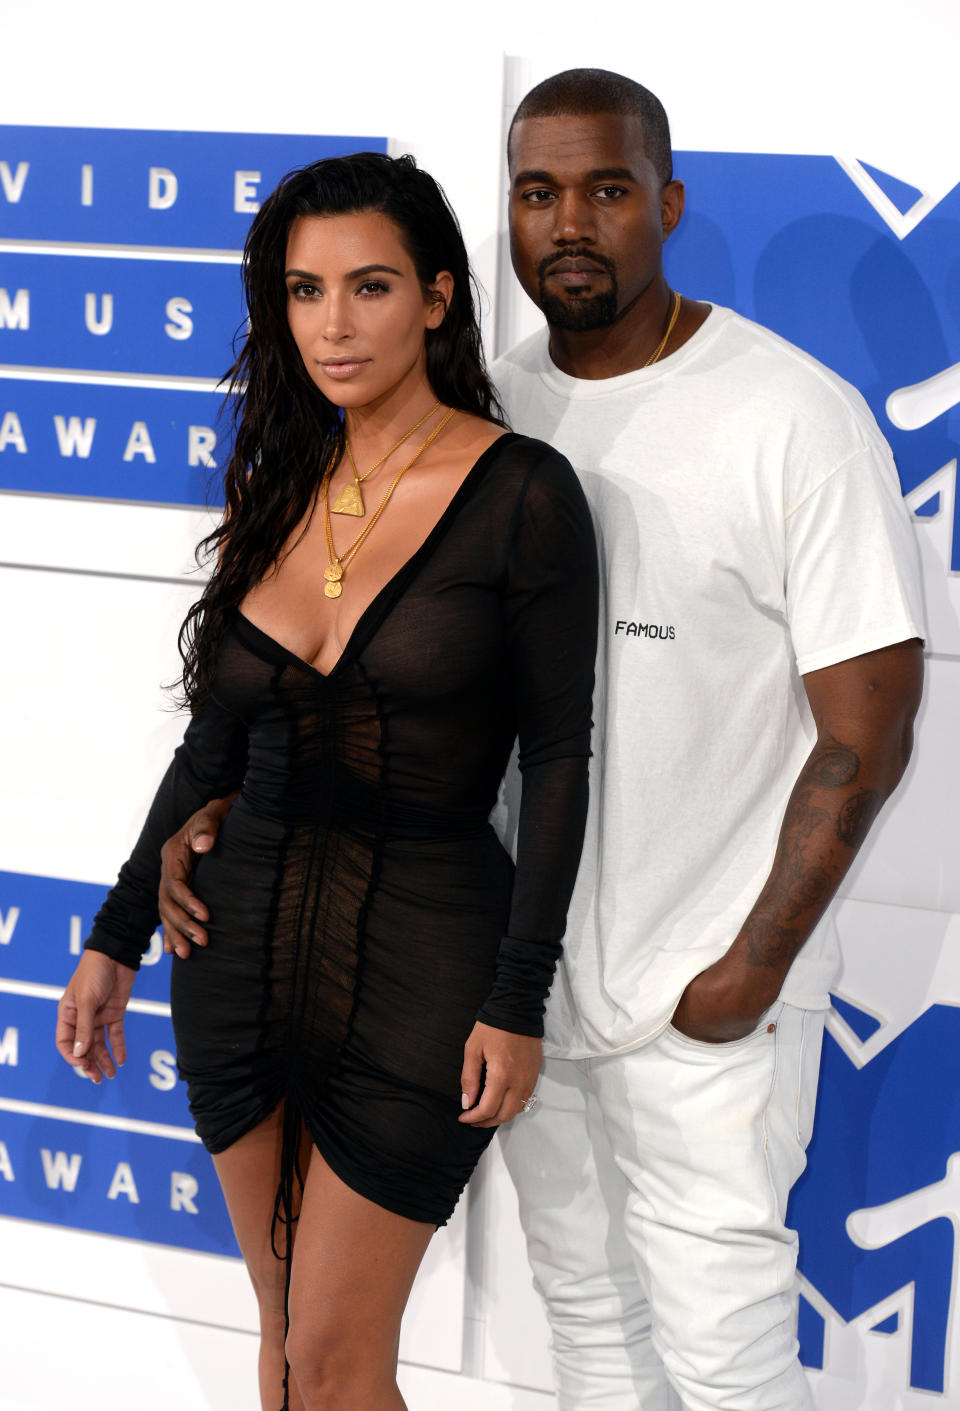 Kim Kardashian and Kanye West arriving at the MTV Video Music Awards 2016, Madison Square Garden, New York City. (PA)